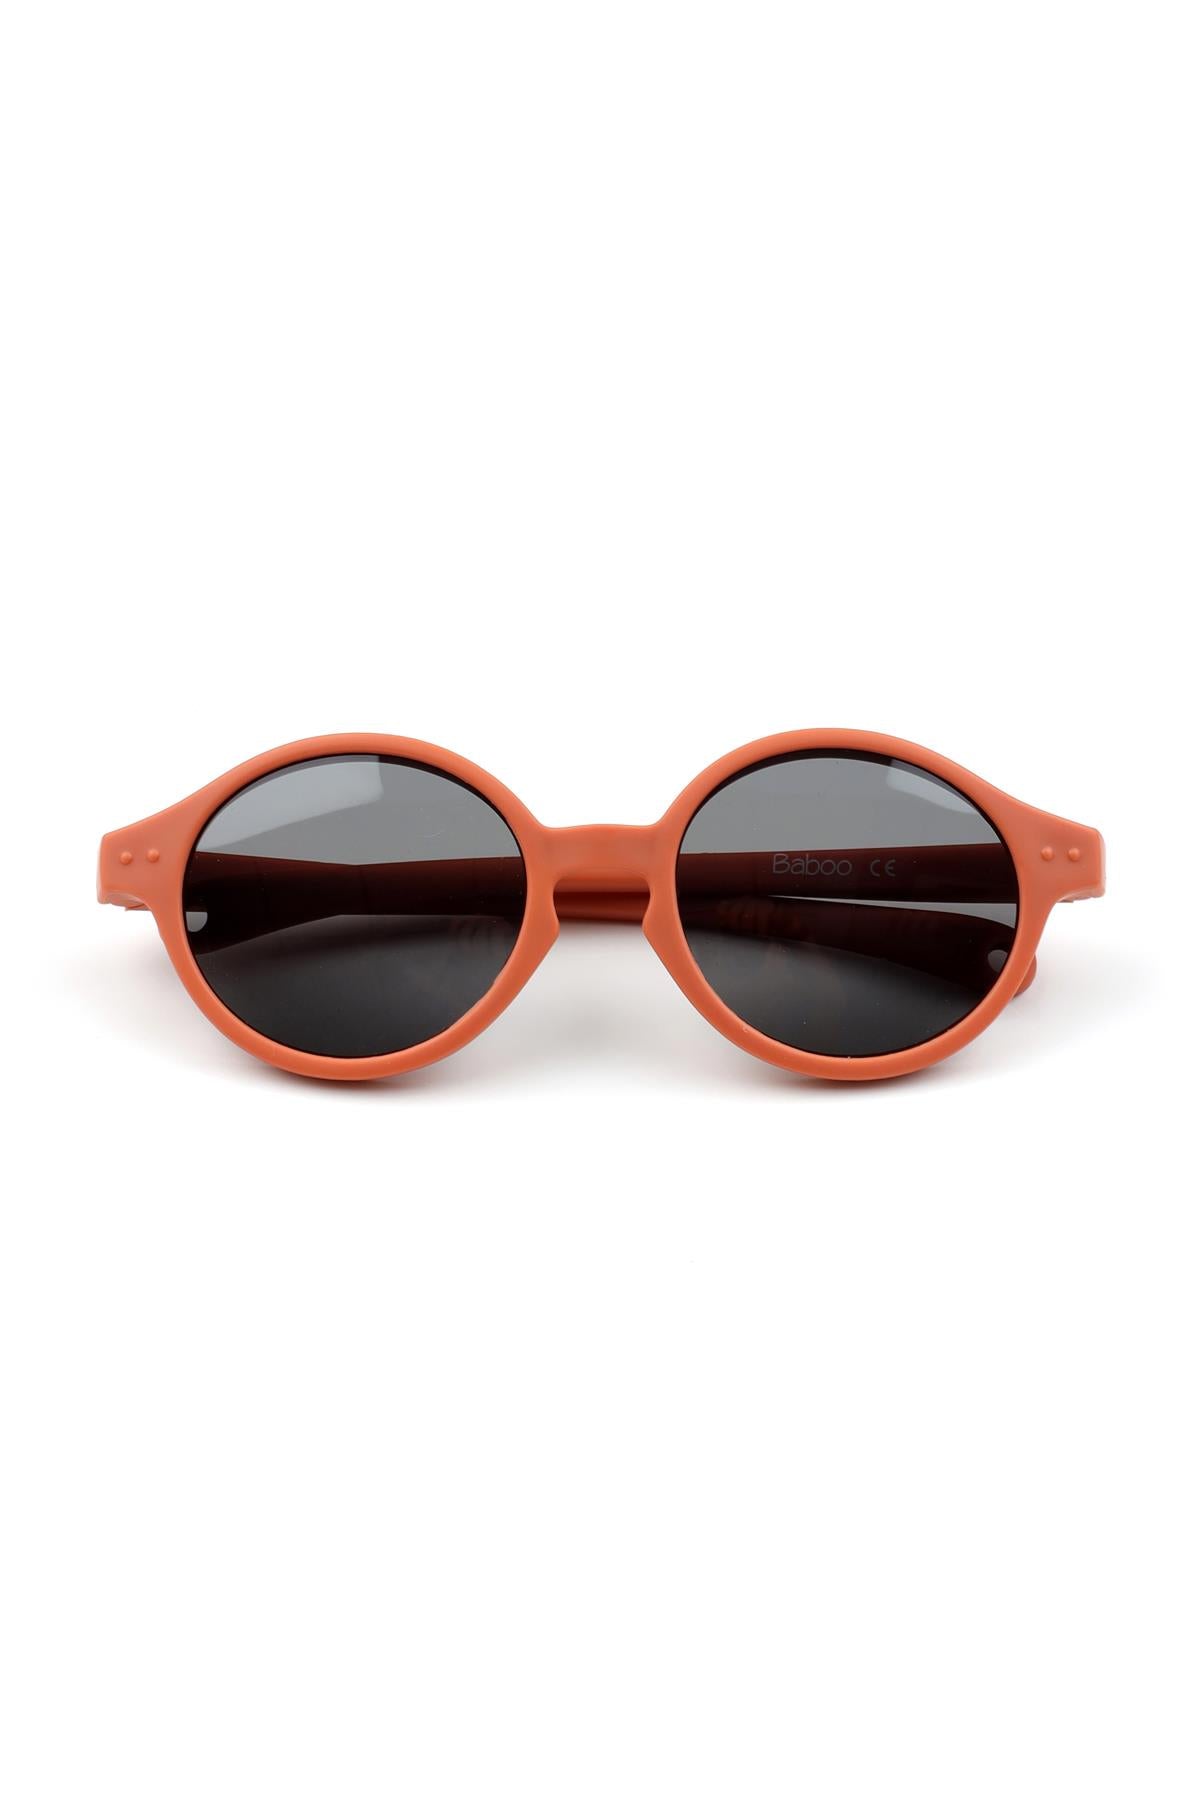 Ultra Light Mini Size Baby Sunglasses Orange